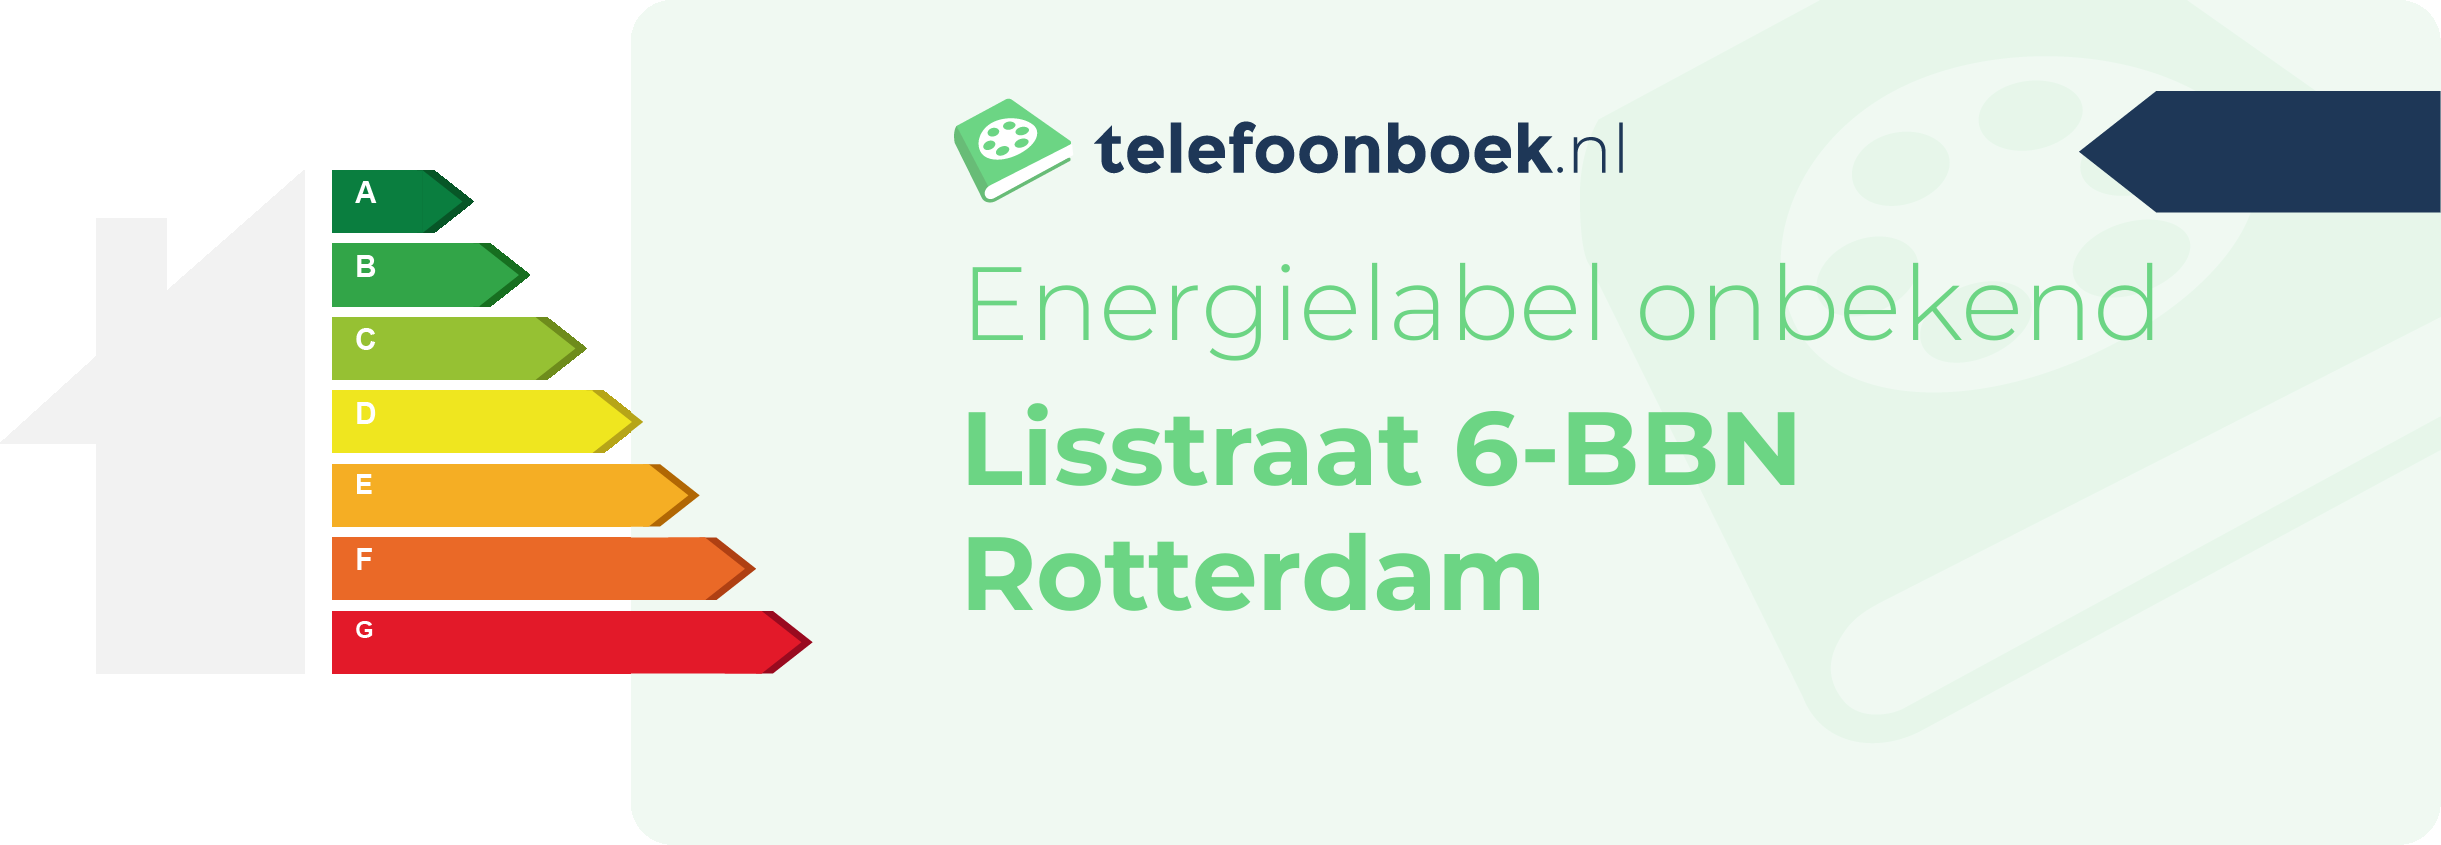 Energielabel Lisstraat 6-BBN Rotterdam